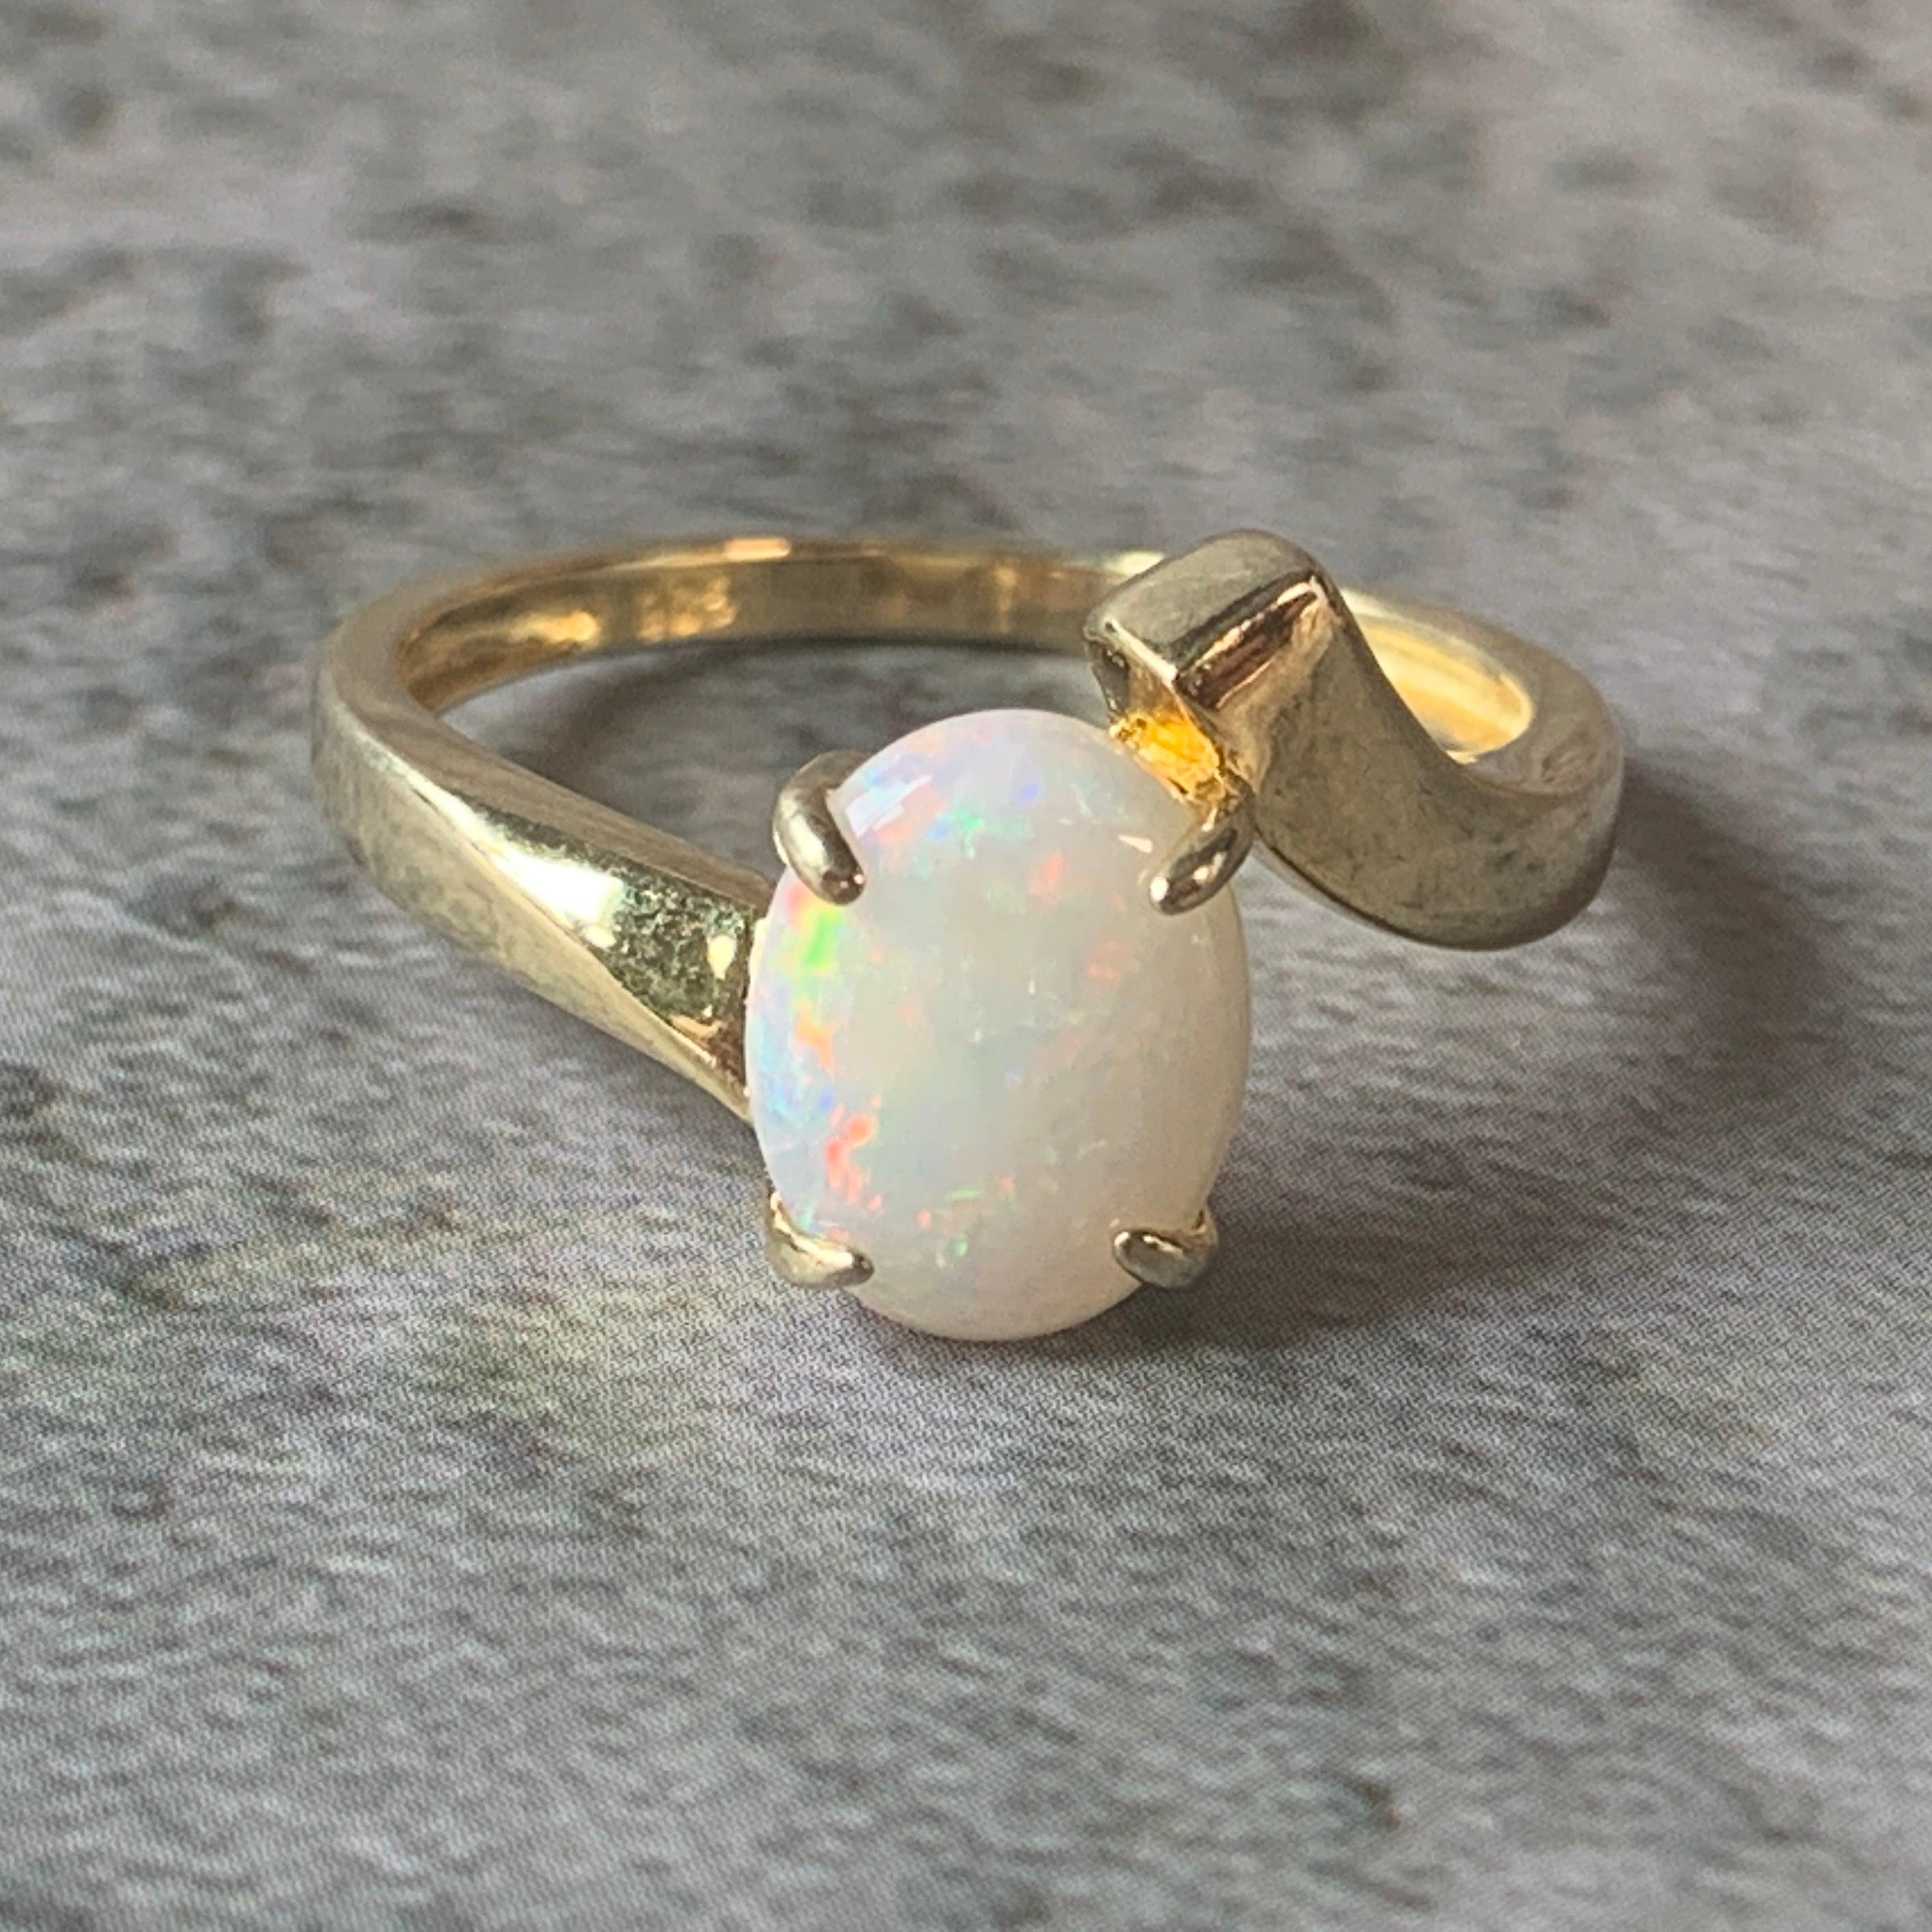 Gold plated 9x7mm White Opal double curve shank design ring - Masterpiece Jewellery Opal & Gems Sydney Australia | Online Shop